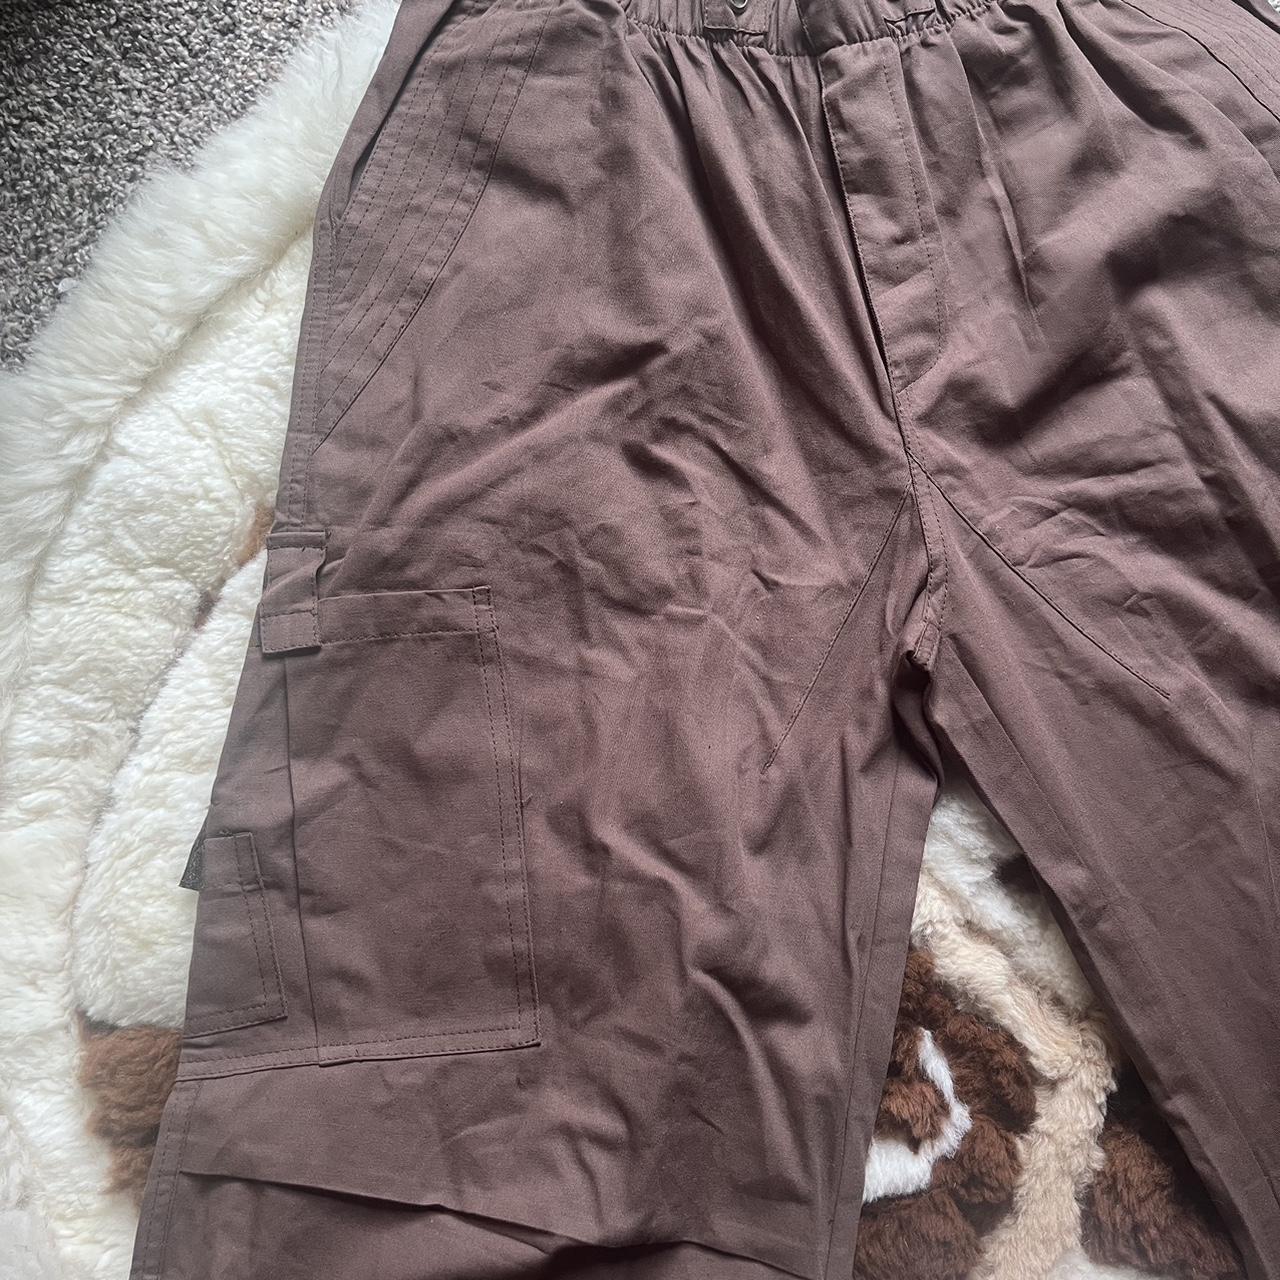 Men's Brown Trousers | Depop